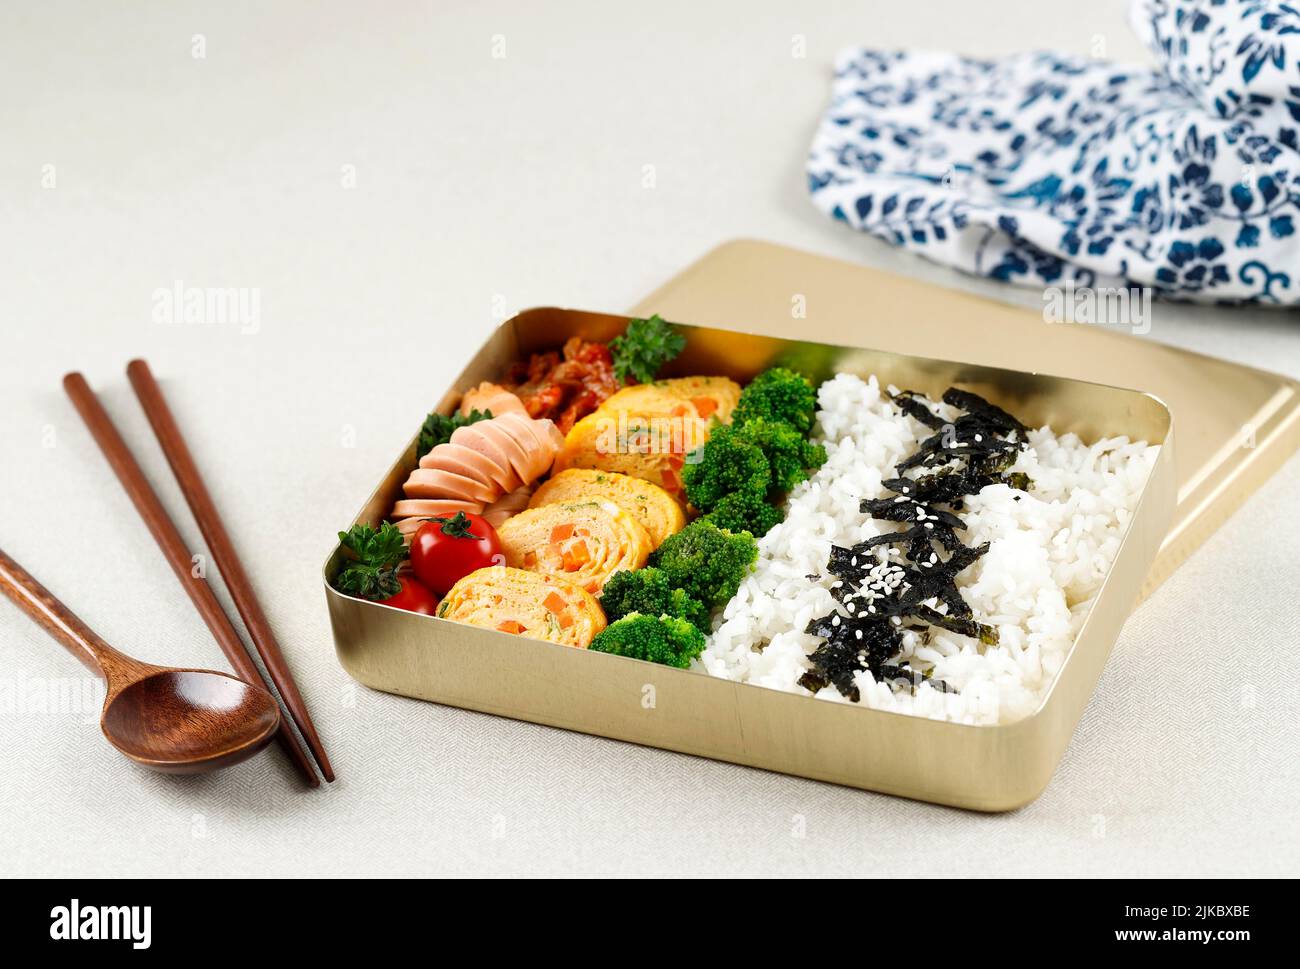 https://c8.alamy.com/comp/2JKBXBE/korean-lunchbox-dosirak-packed-meal-bento-lunchbox-with-various-banchan-gyeran-mari-tomato-steamed-broccoli-kimchi-and-sausage-2JKBXBE.jpg